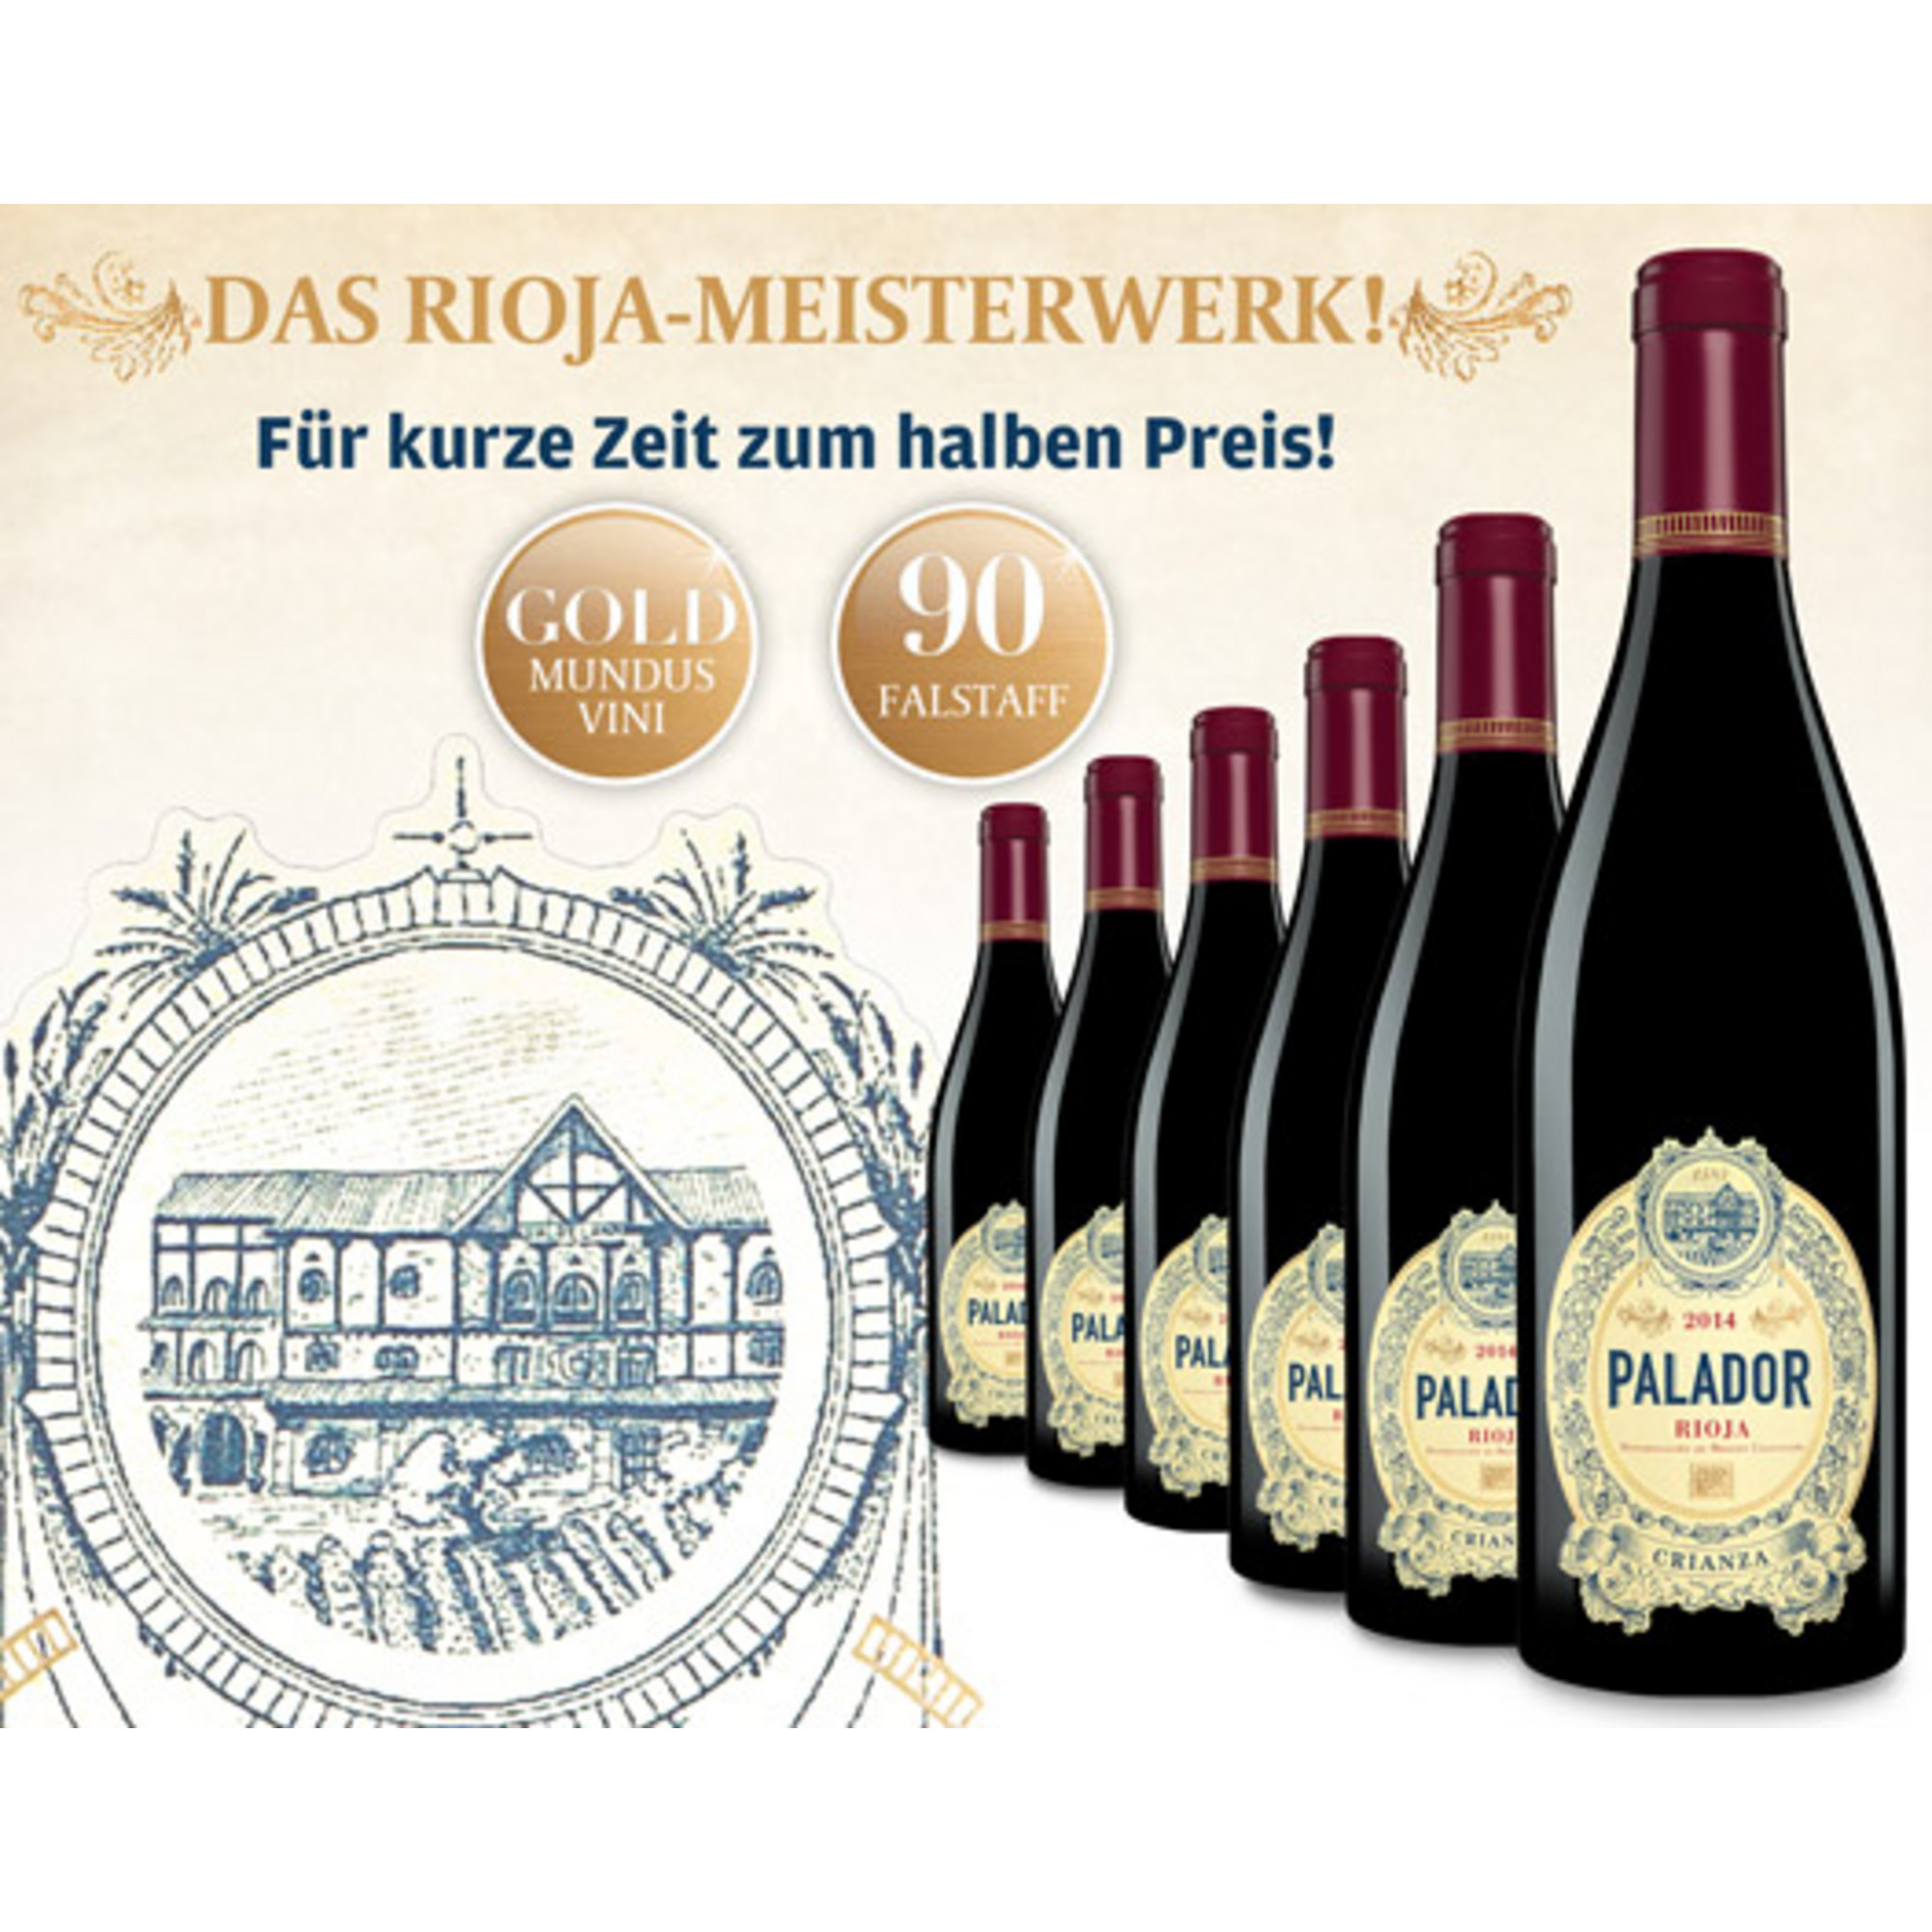 Rioja Spezial - Palador Crianza 2014  4.5L 14.5% Vol. Trocken Weinpaket aus Spanien 24008 vinos DE